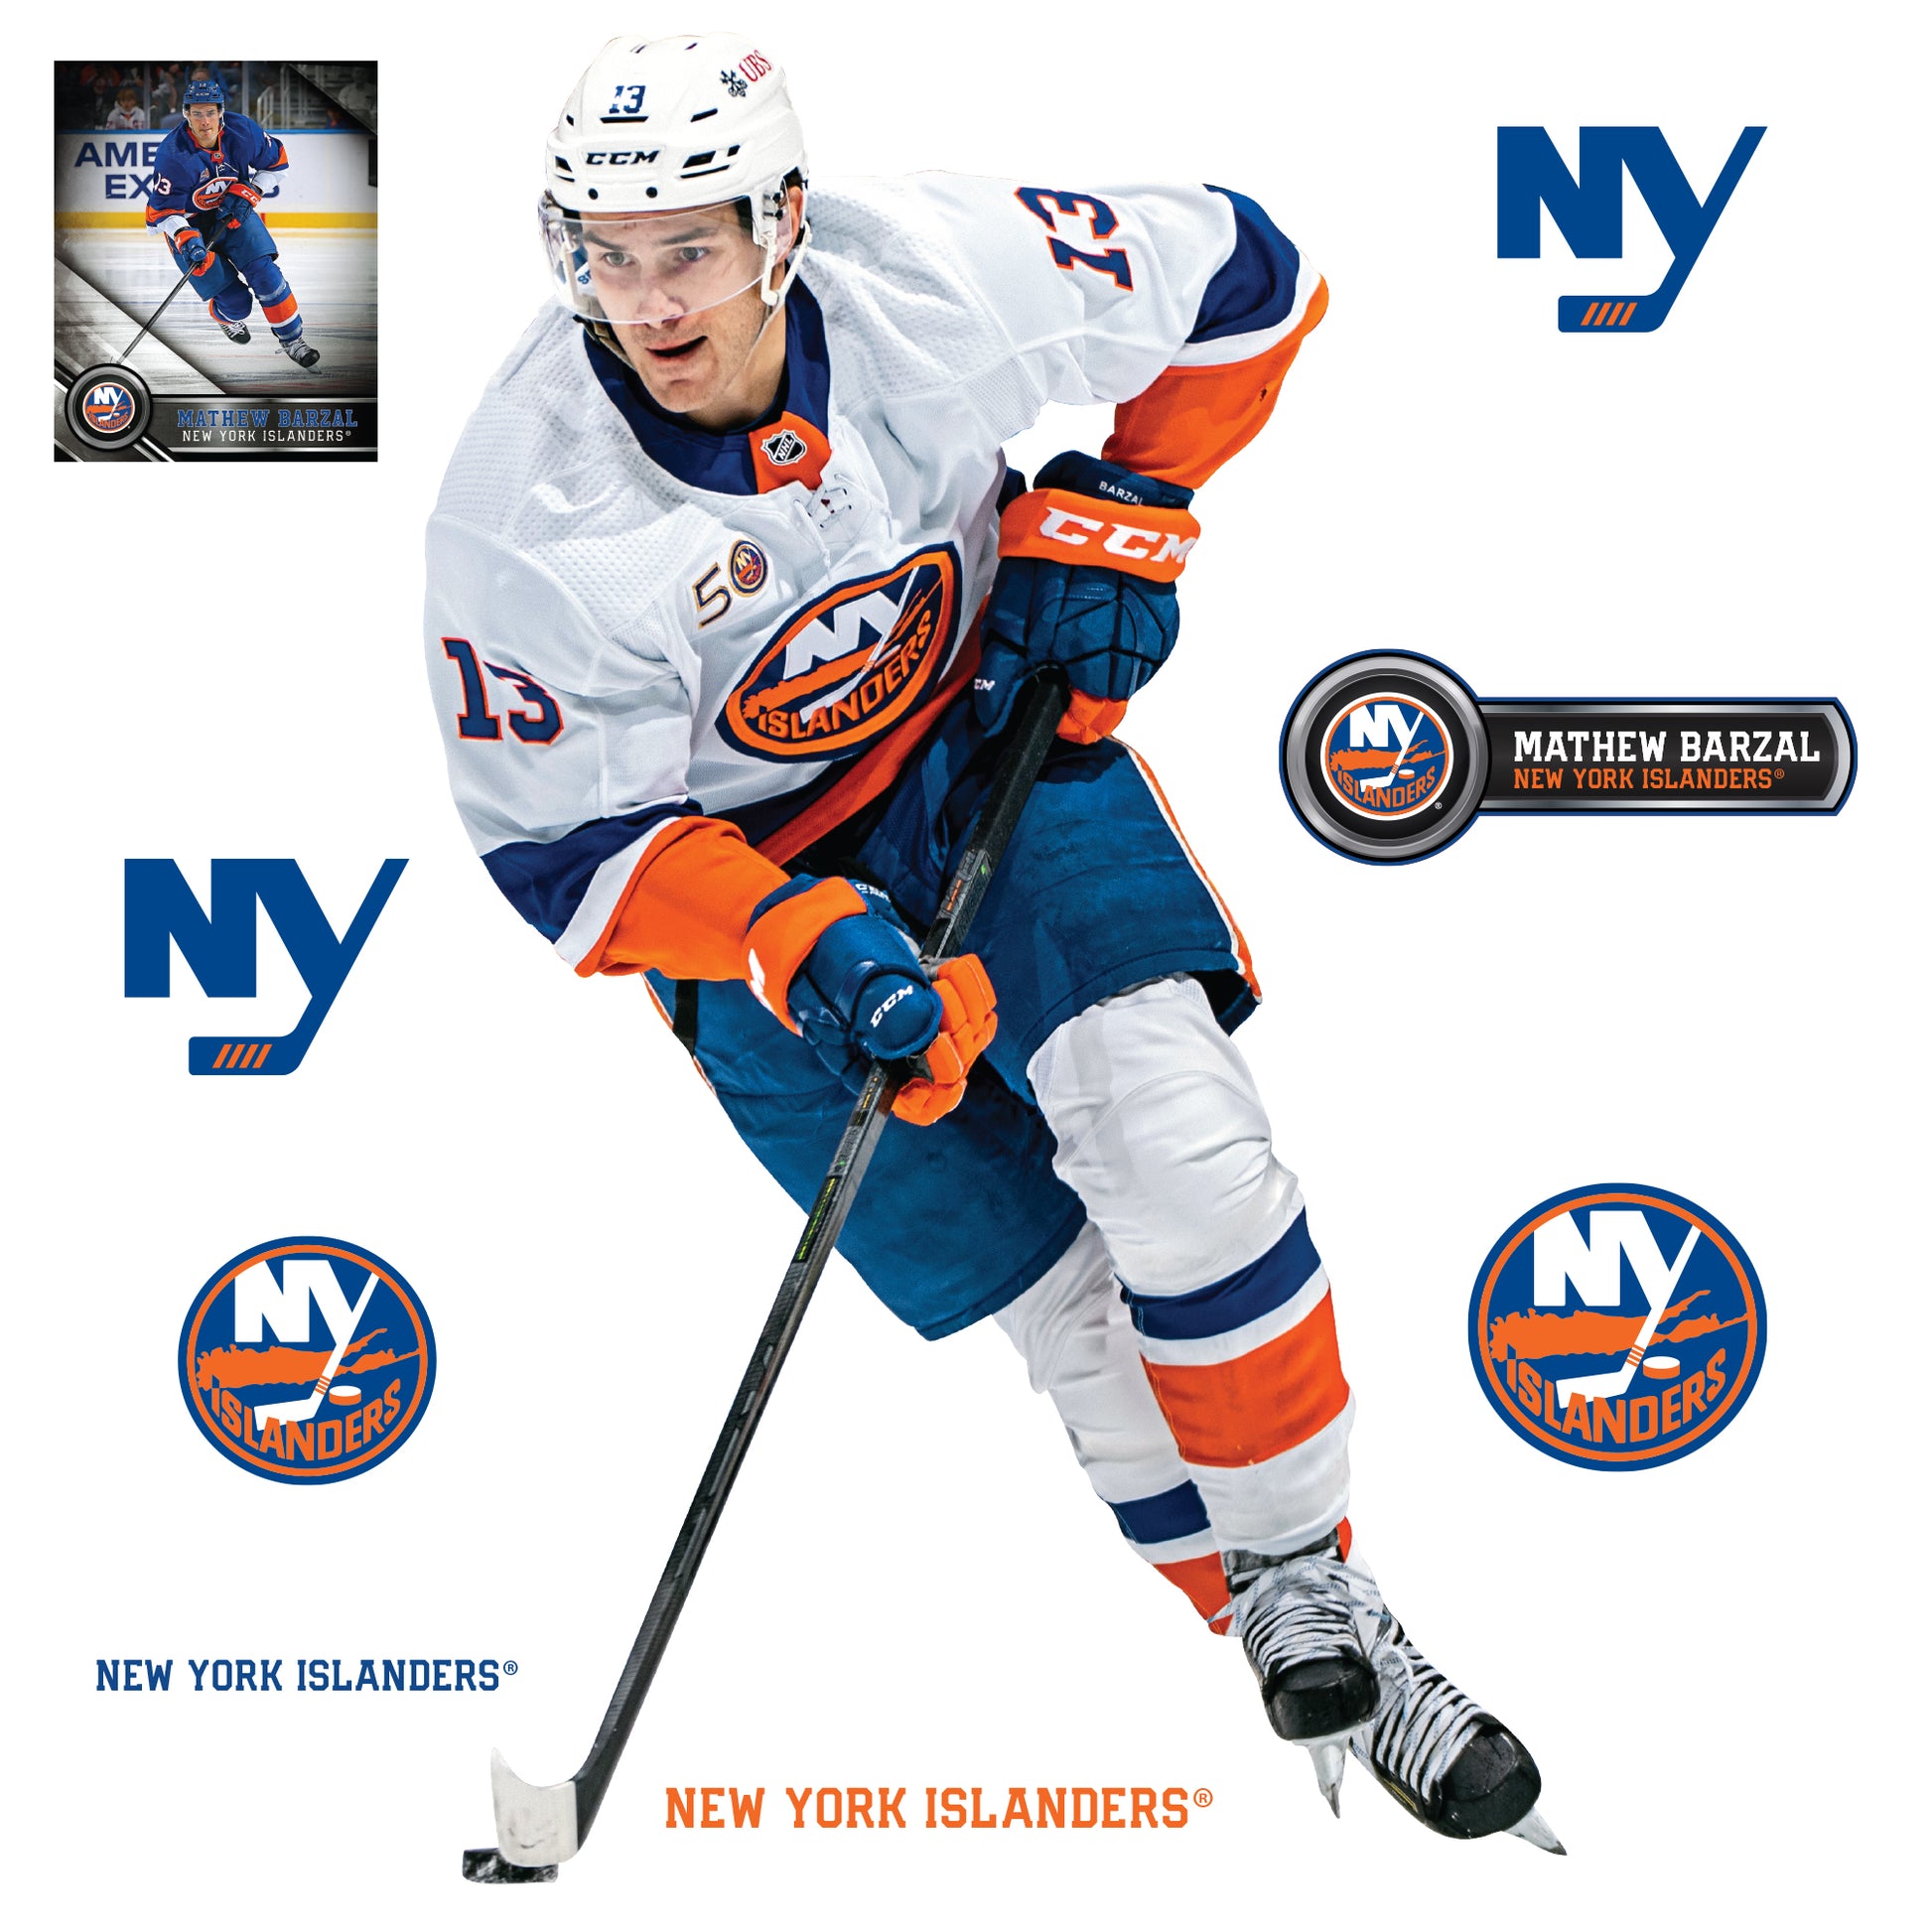 Mathew Barzal 13 New York Islanders ice hockey player poster shirt